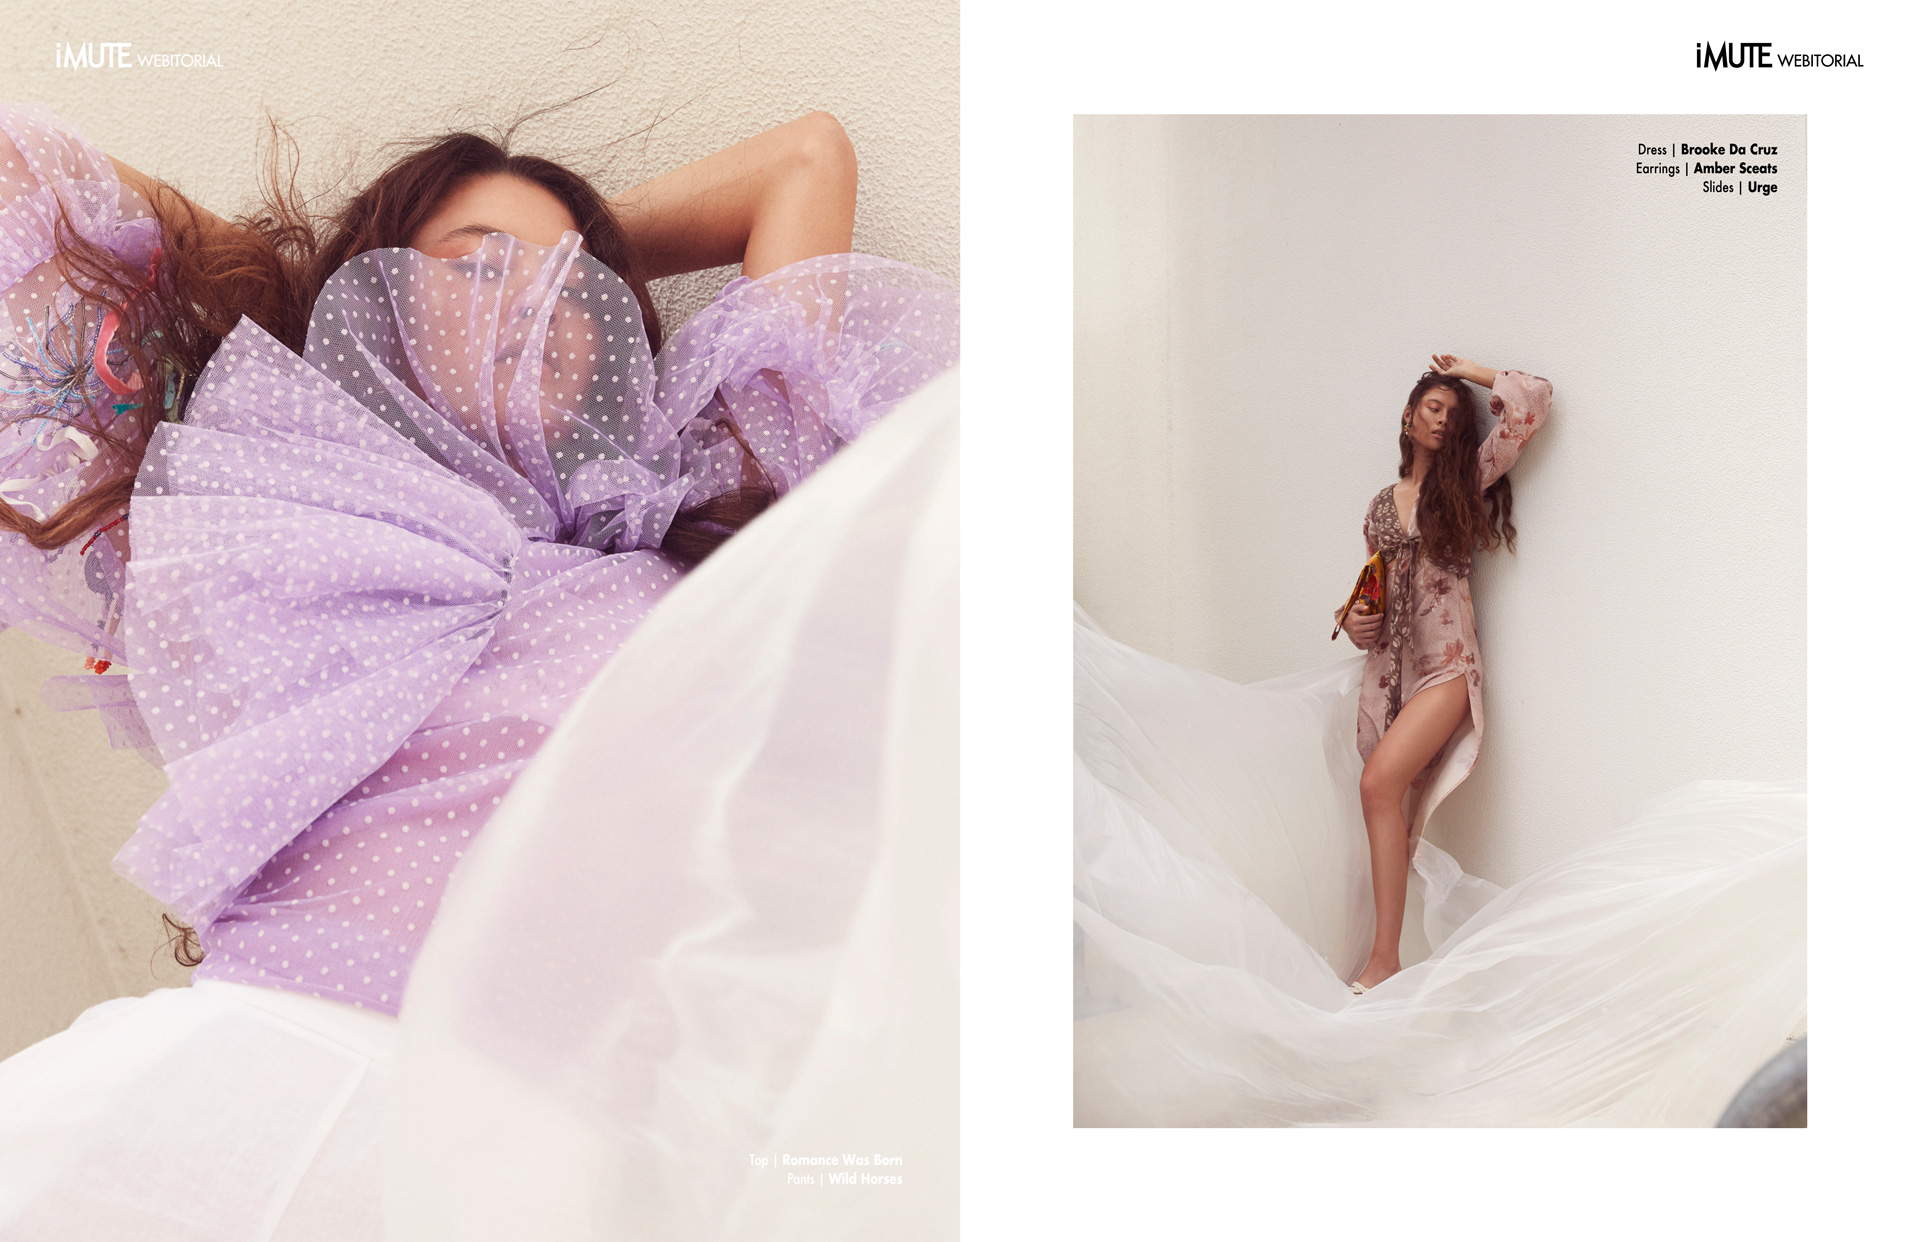 apparition webitorial for iMute Magazine PHOTOGRAPHER | Liam Rhys Jones MODEL | Megumi @ Vivien’s Models STYLIST | Rochelle Renwick MAKEUP | Janelle Han HAIR | Jasmin Kidd